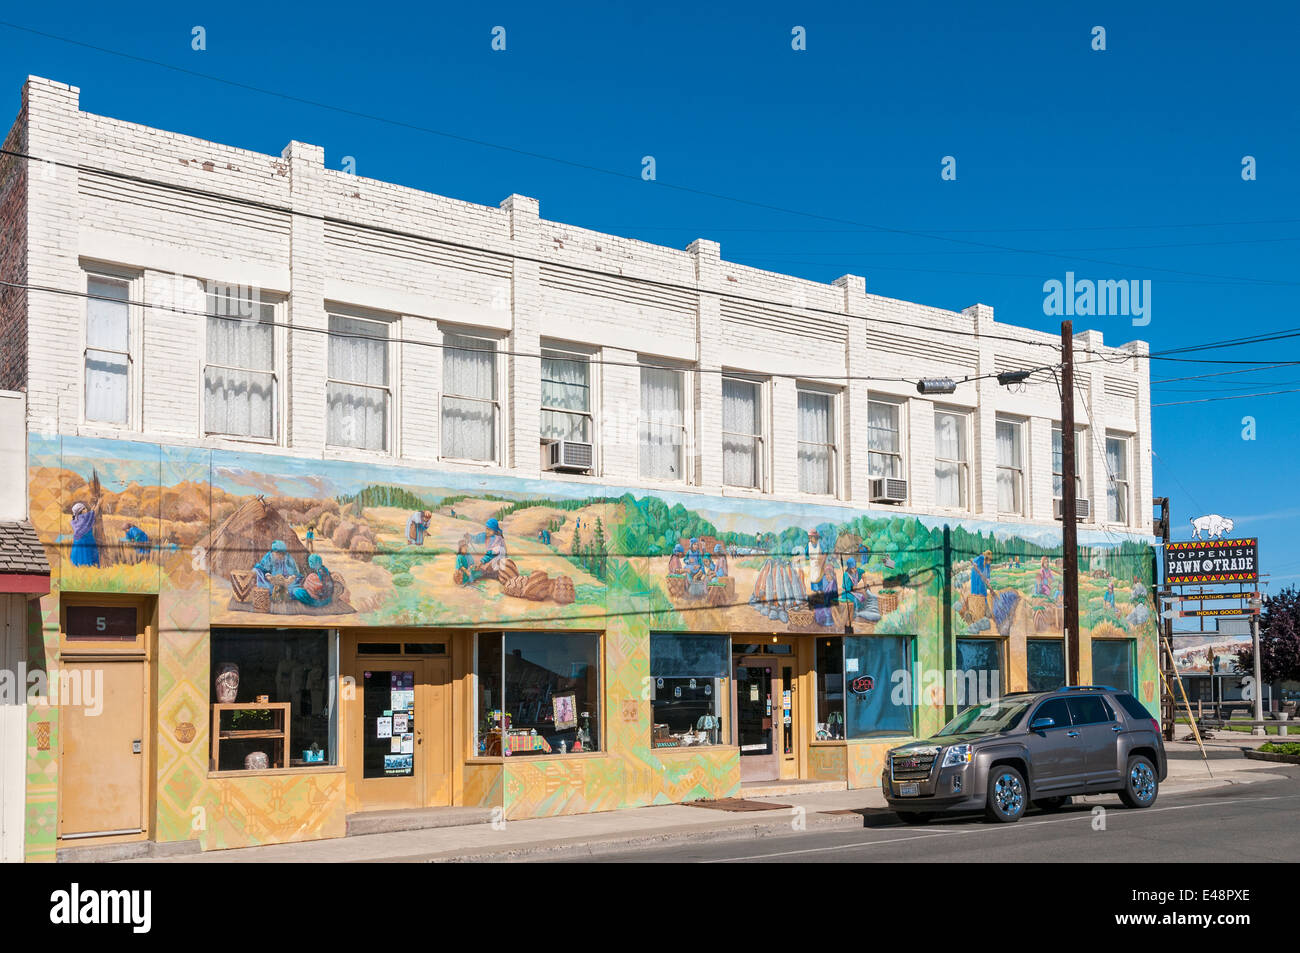 Washington, Toppenish, historical wall mural, pawn shop Stock Photo